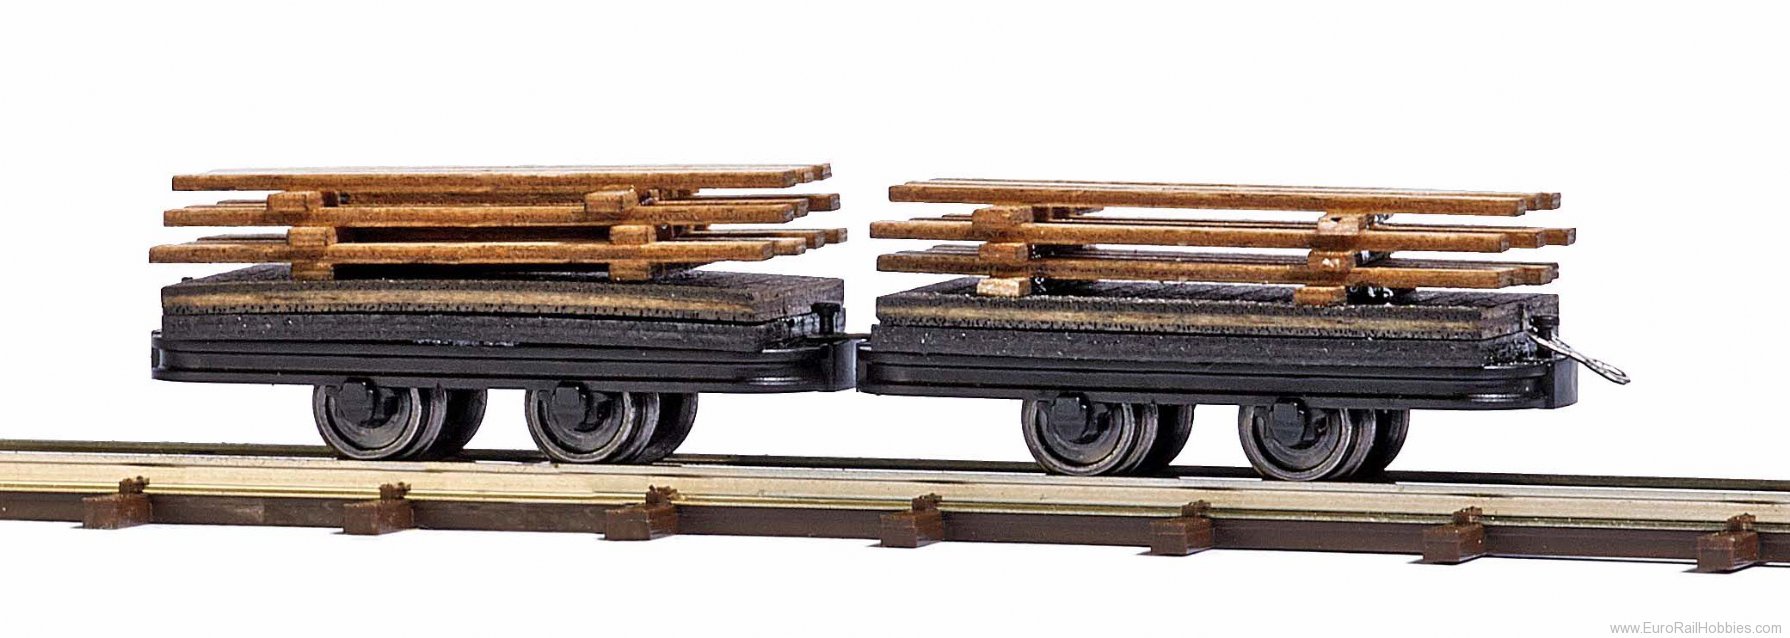 Busch 12218 2 Feldbahn Wagons with planks (HOf Feldbahn)